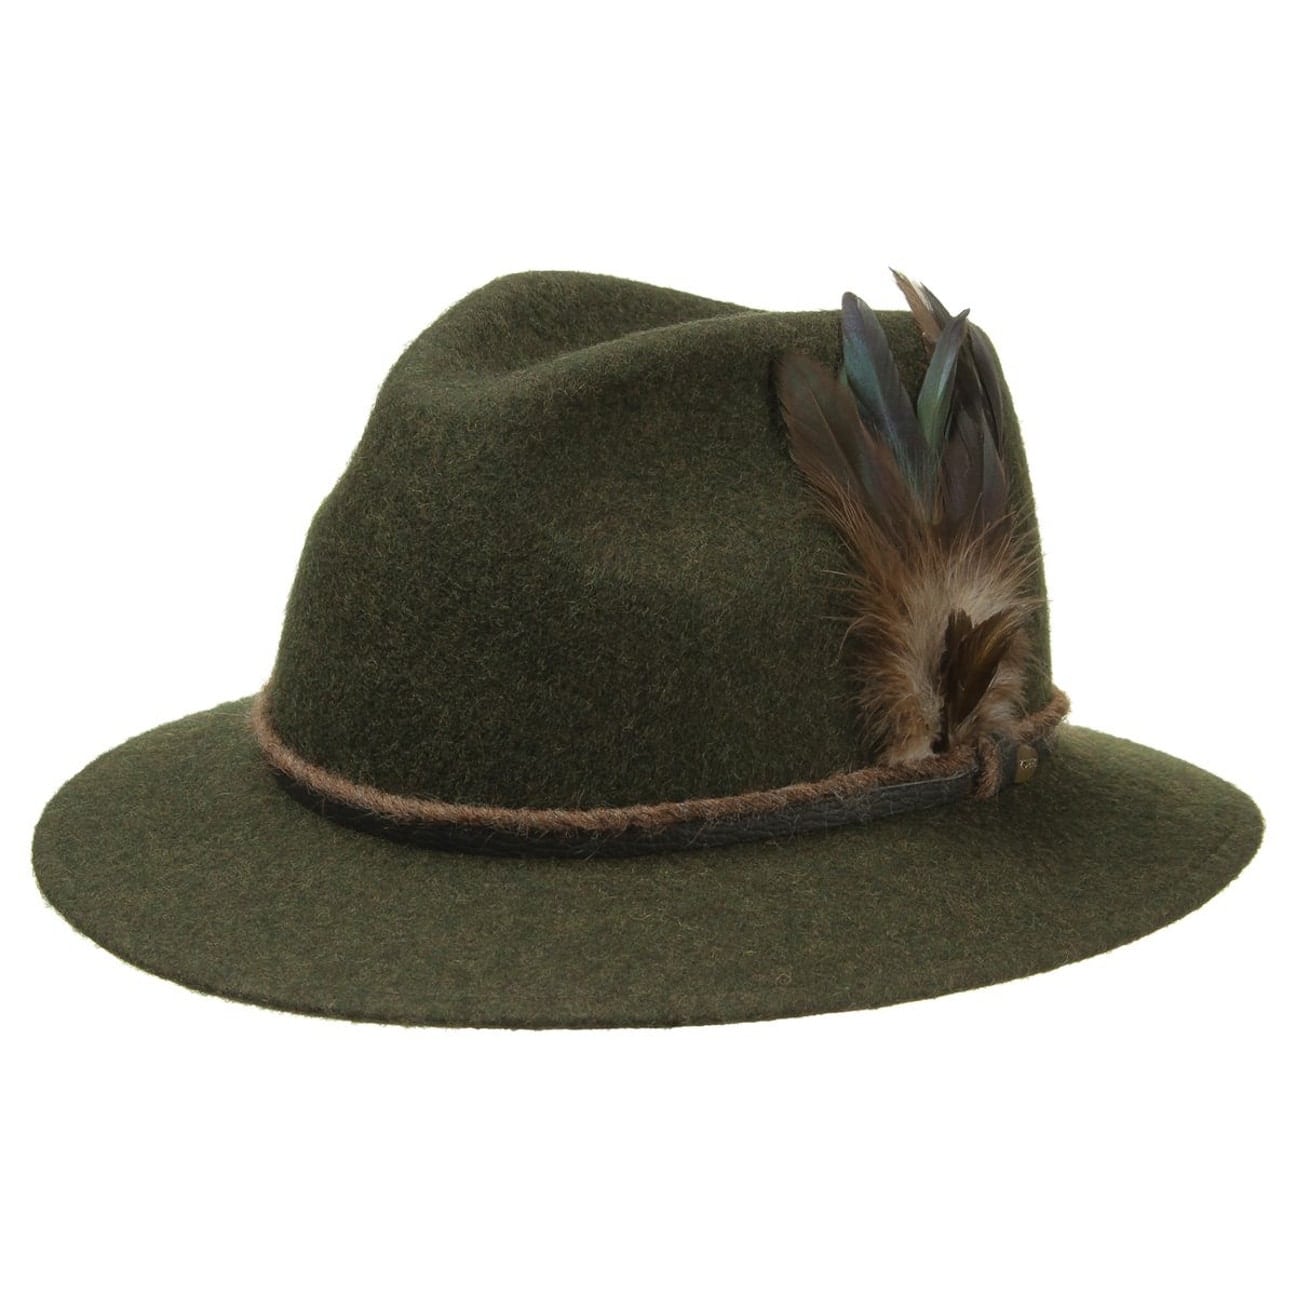 Tyrolean Hat by Mayser - 83,95